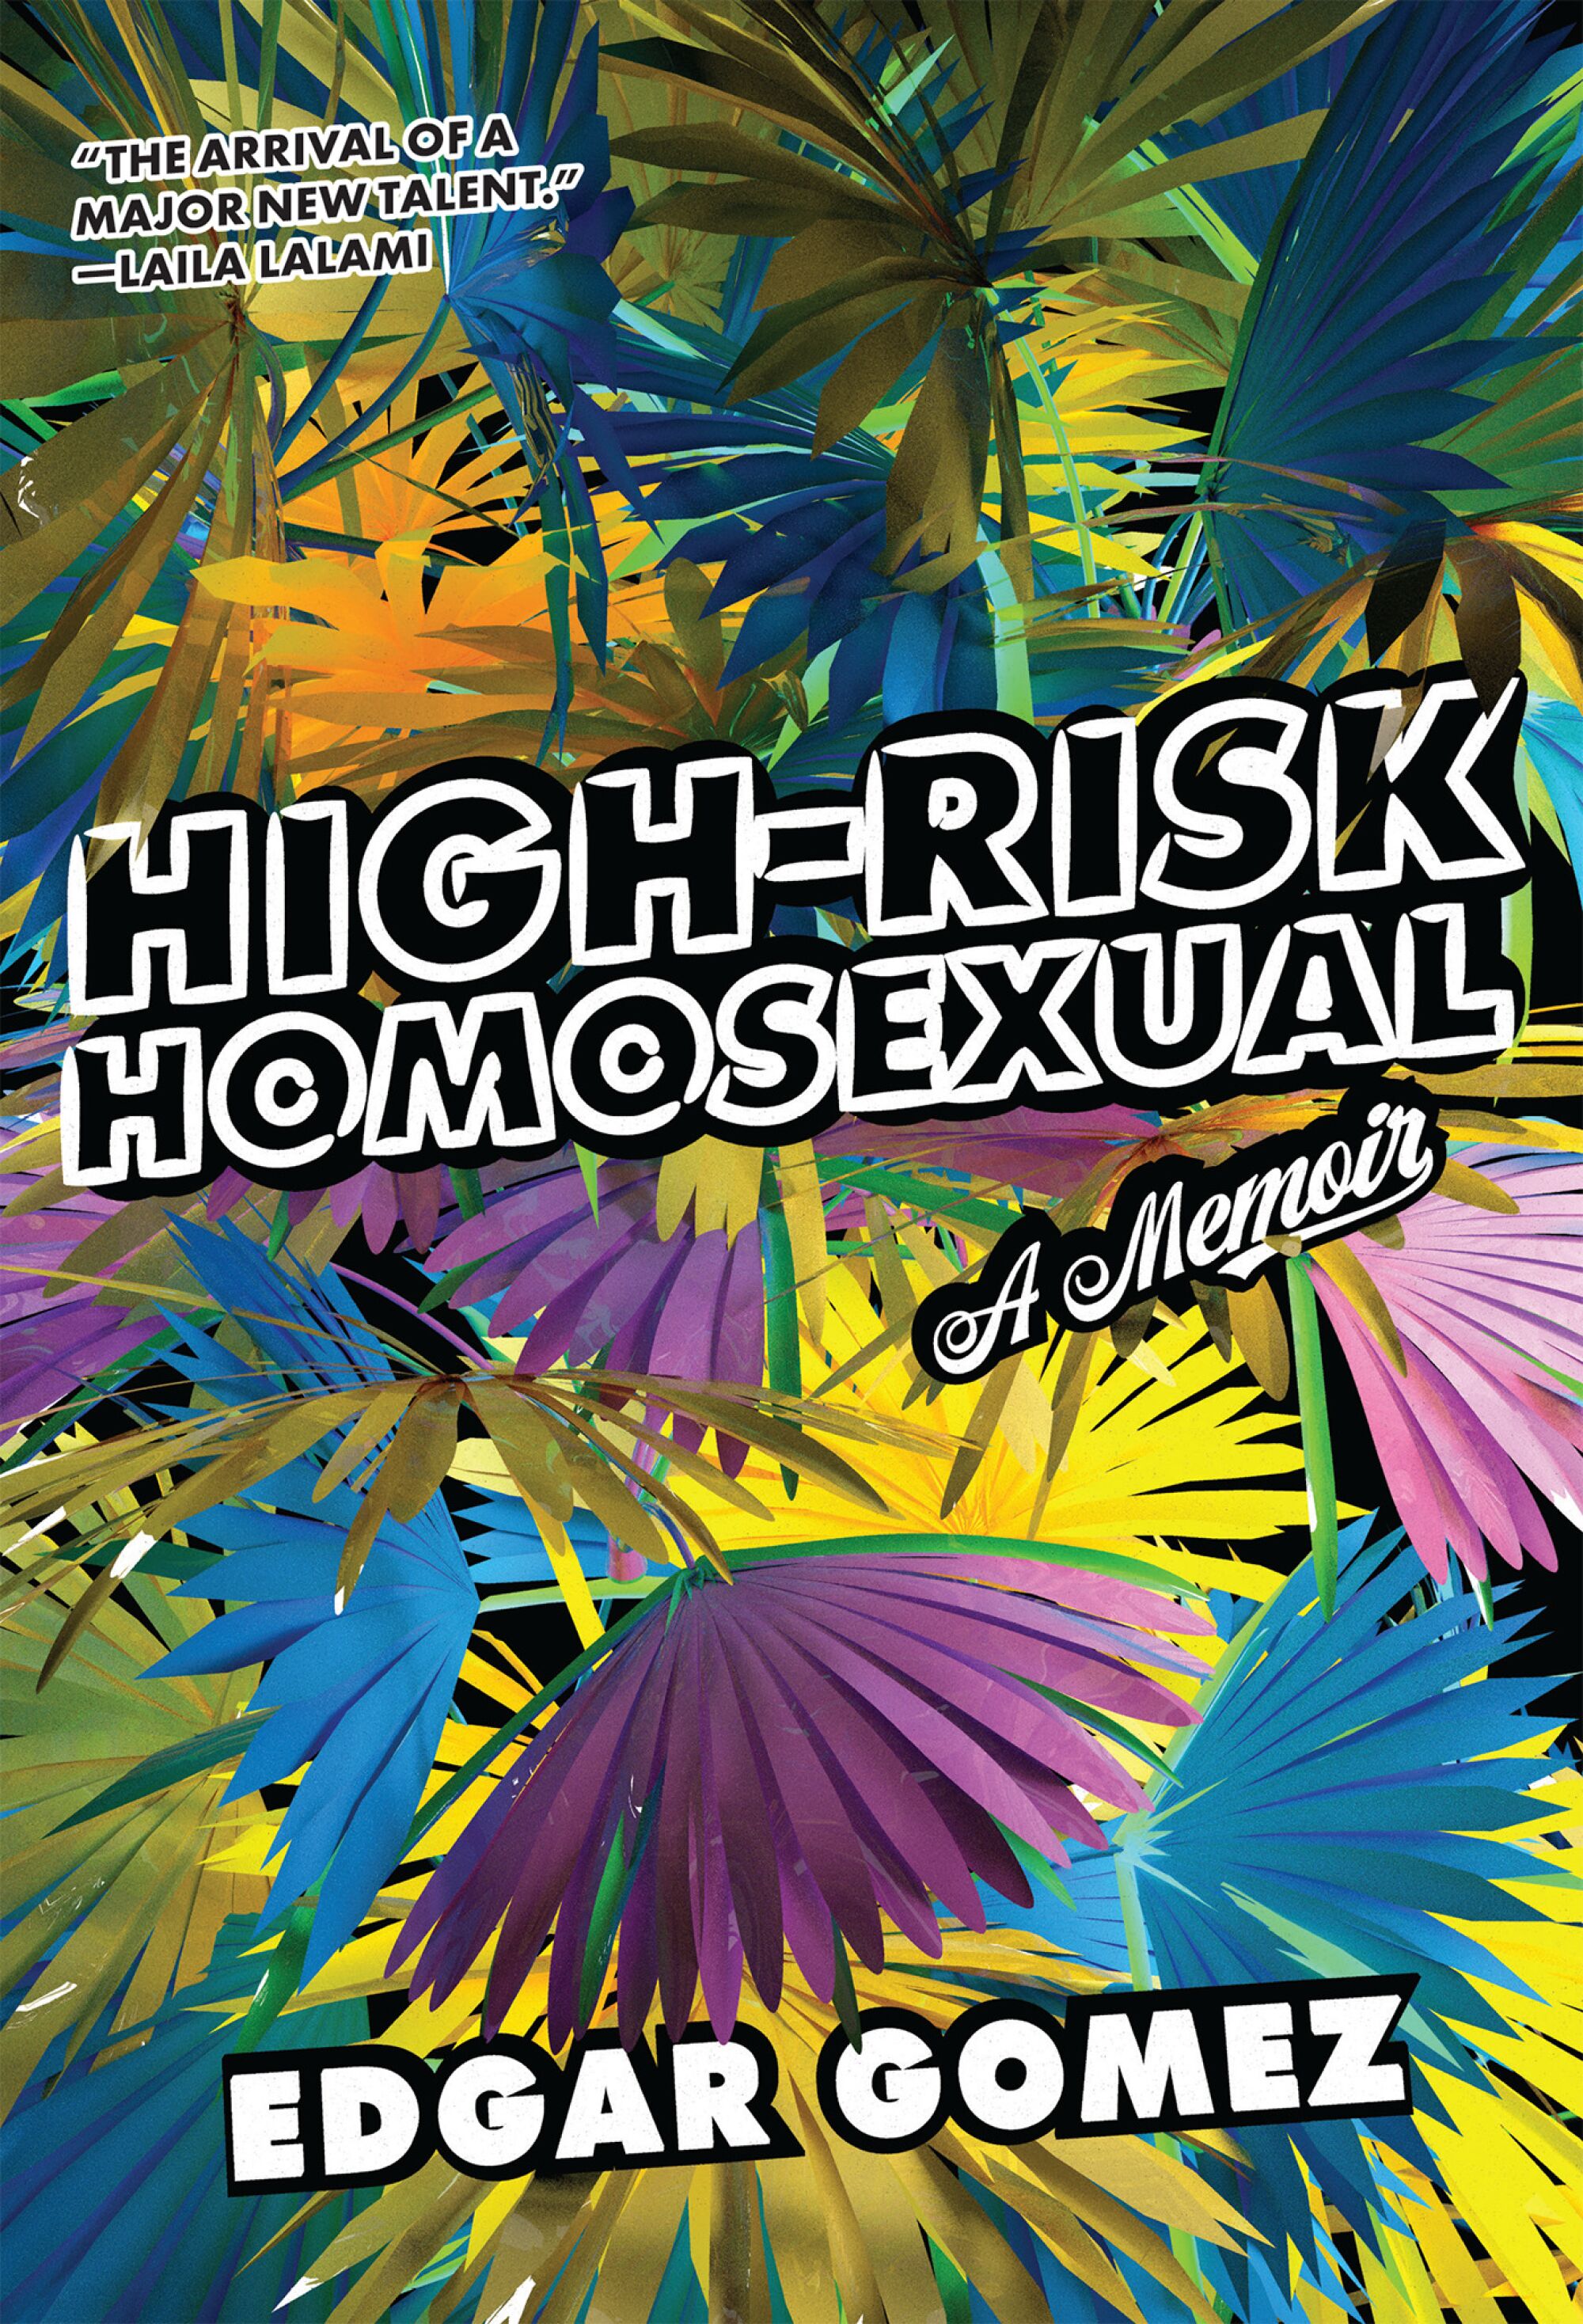 "High-Risk Homosexual" by Edgar Gomez